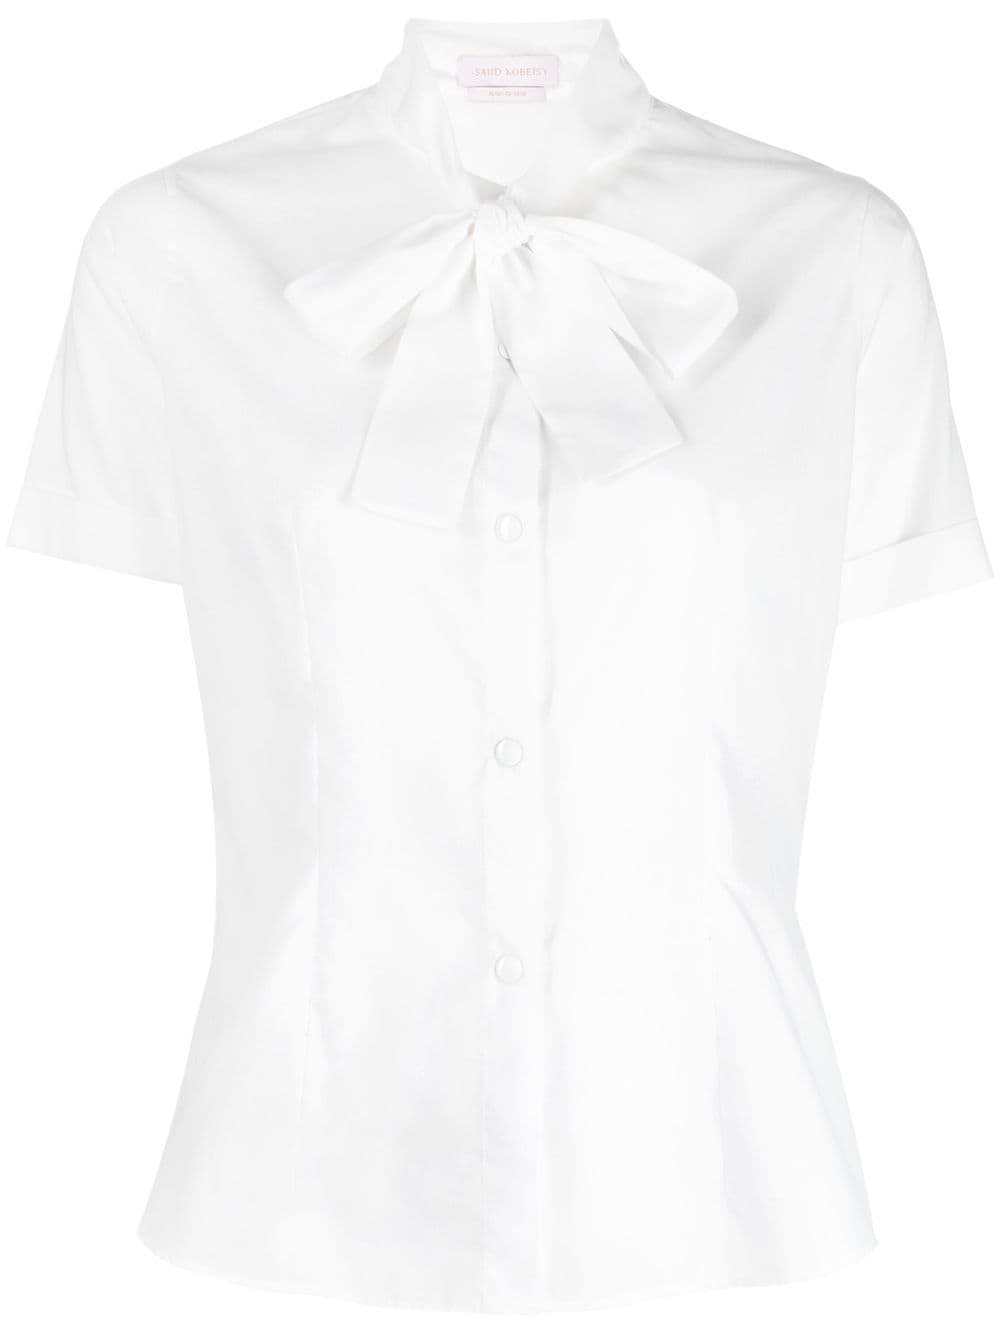 Saiid Kobeisy tied-bow poplin shirt - White von Saiid Kobeisy